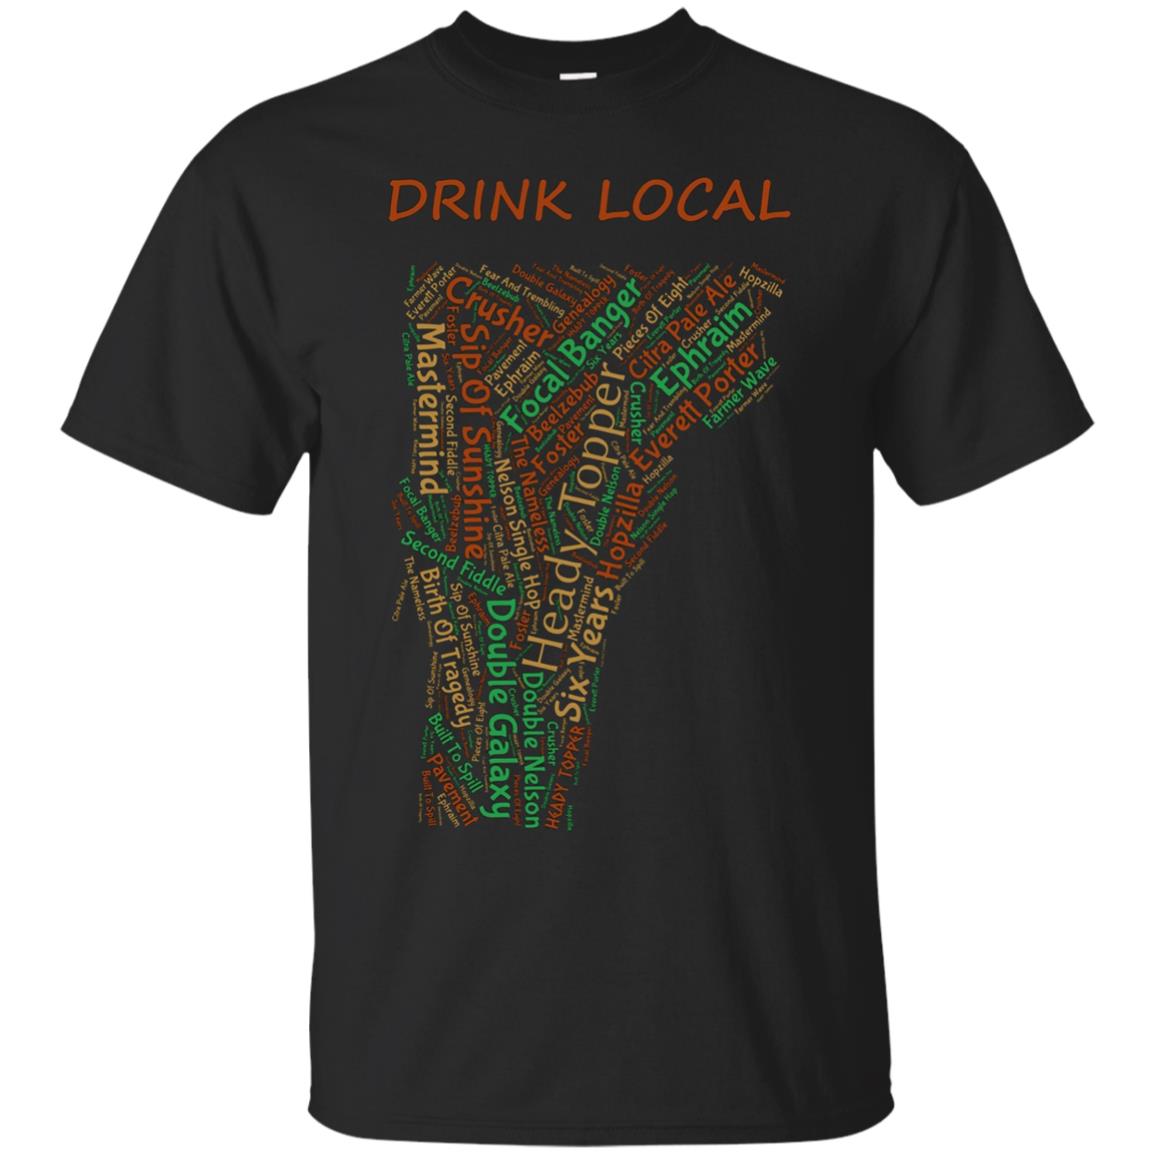 Vermont Drink Local Craft Beer T-shirt